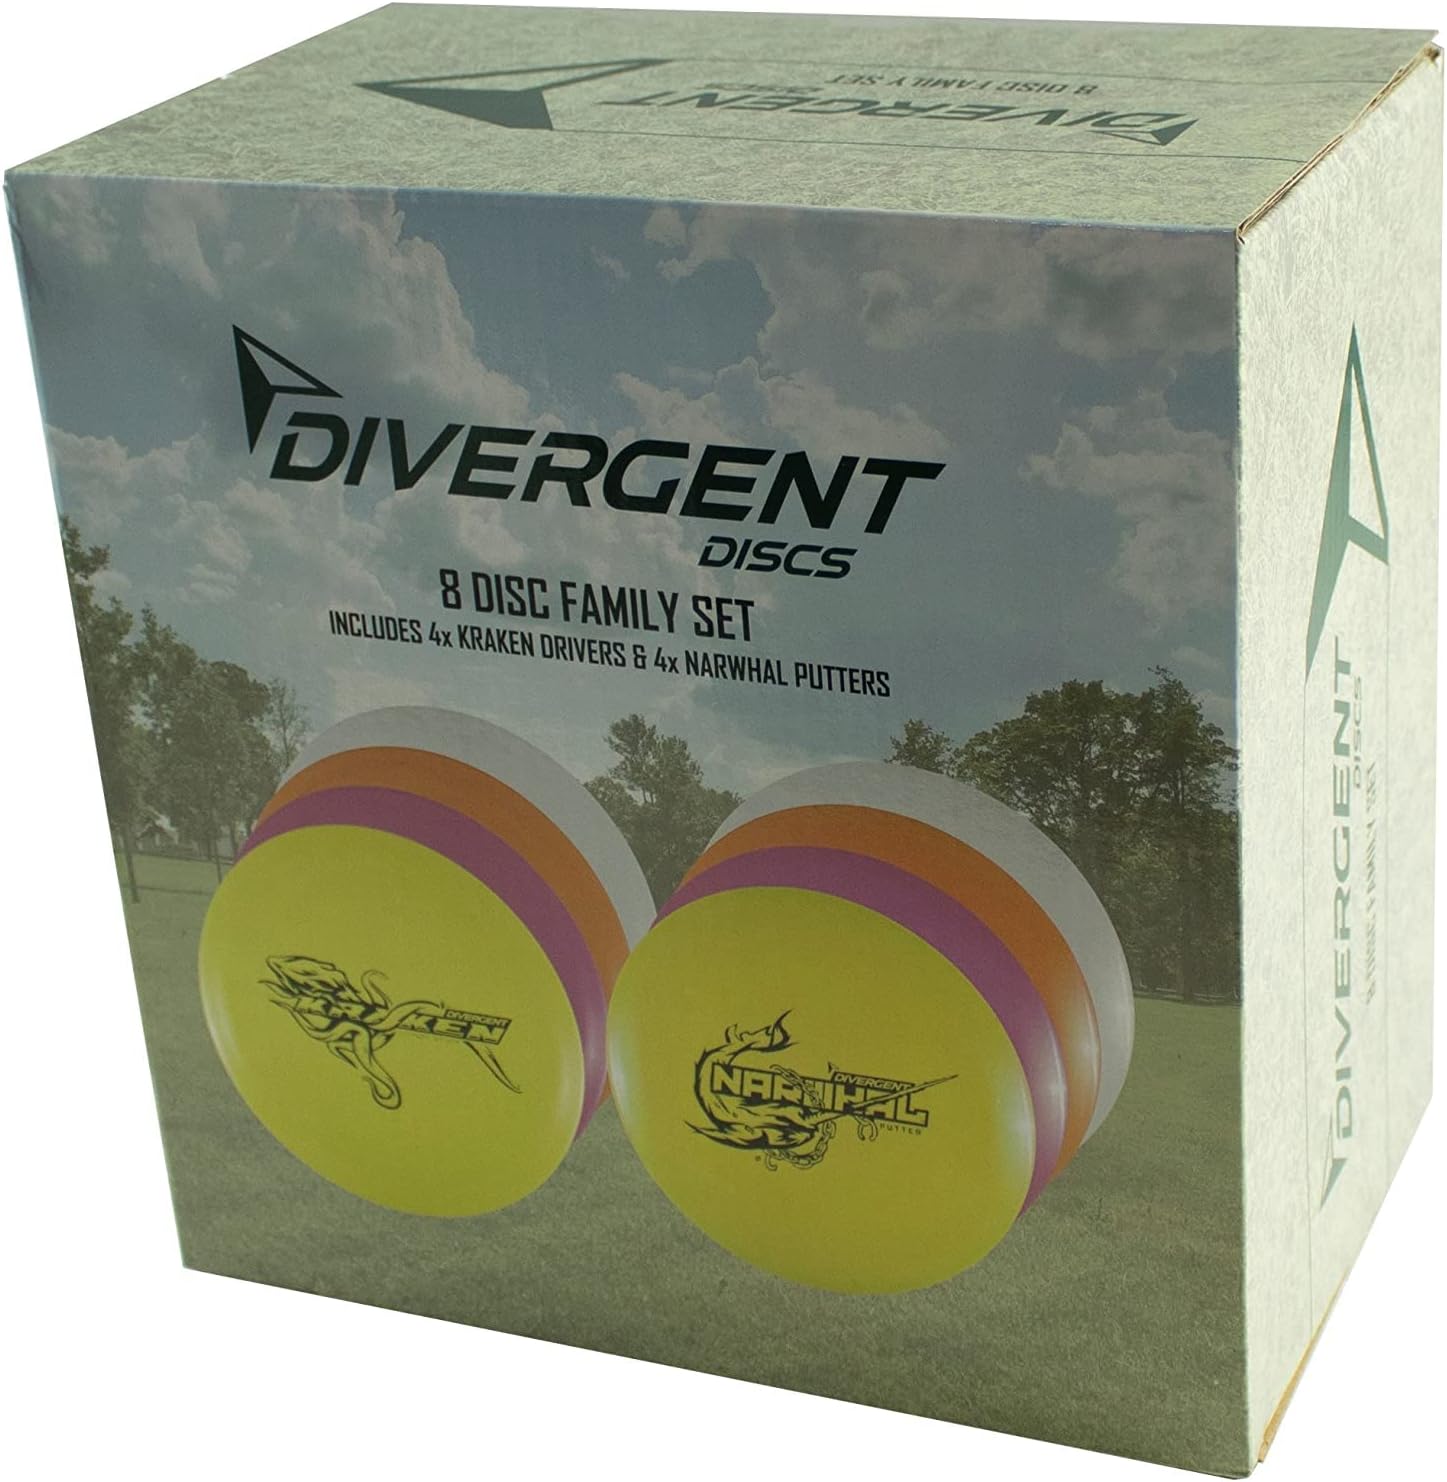 Divergent Discs 8 Disc Family Set